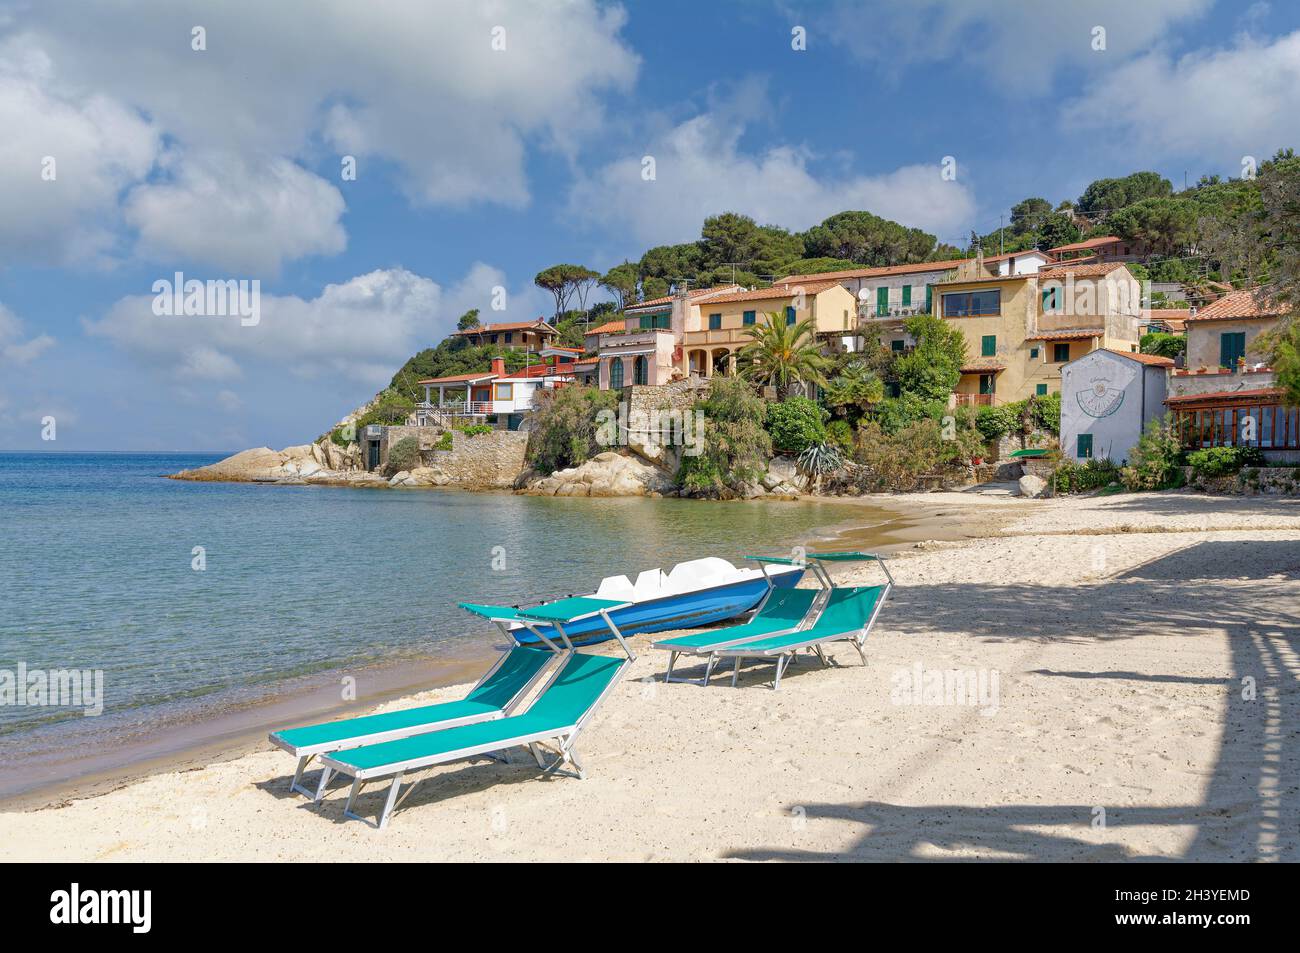 Beach and Village of Scaglieri,Island of Elba,Tuscany,mediterranean Sea,Italy Stock Photo